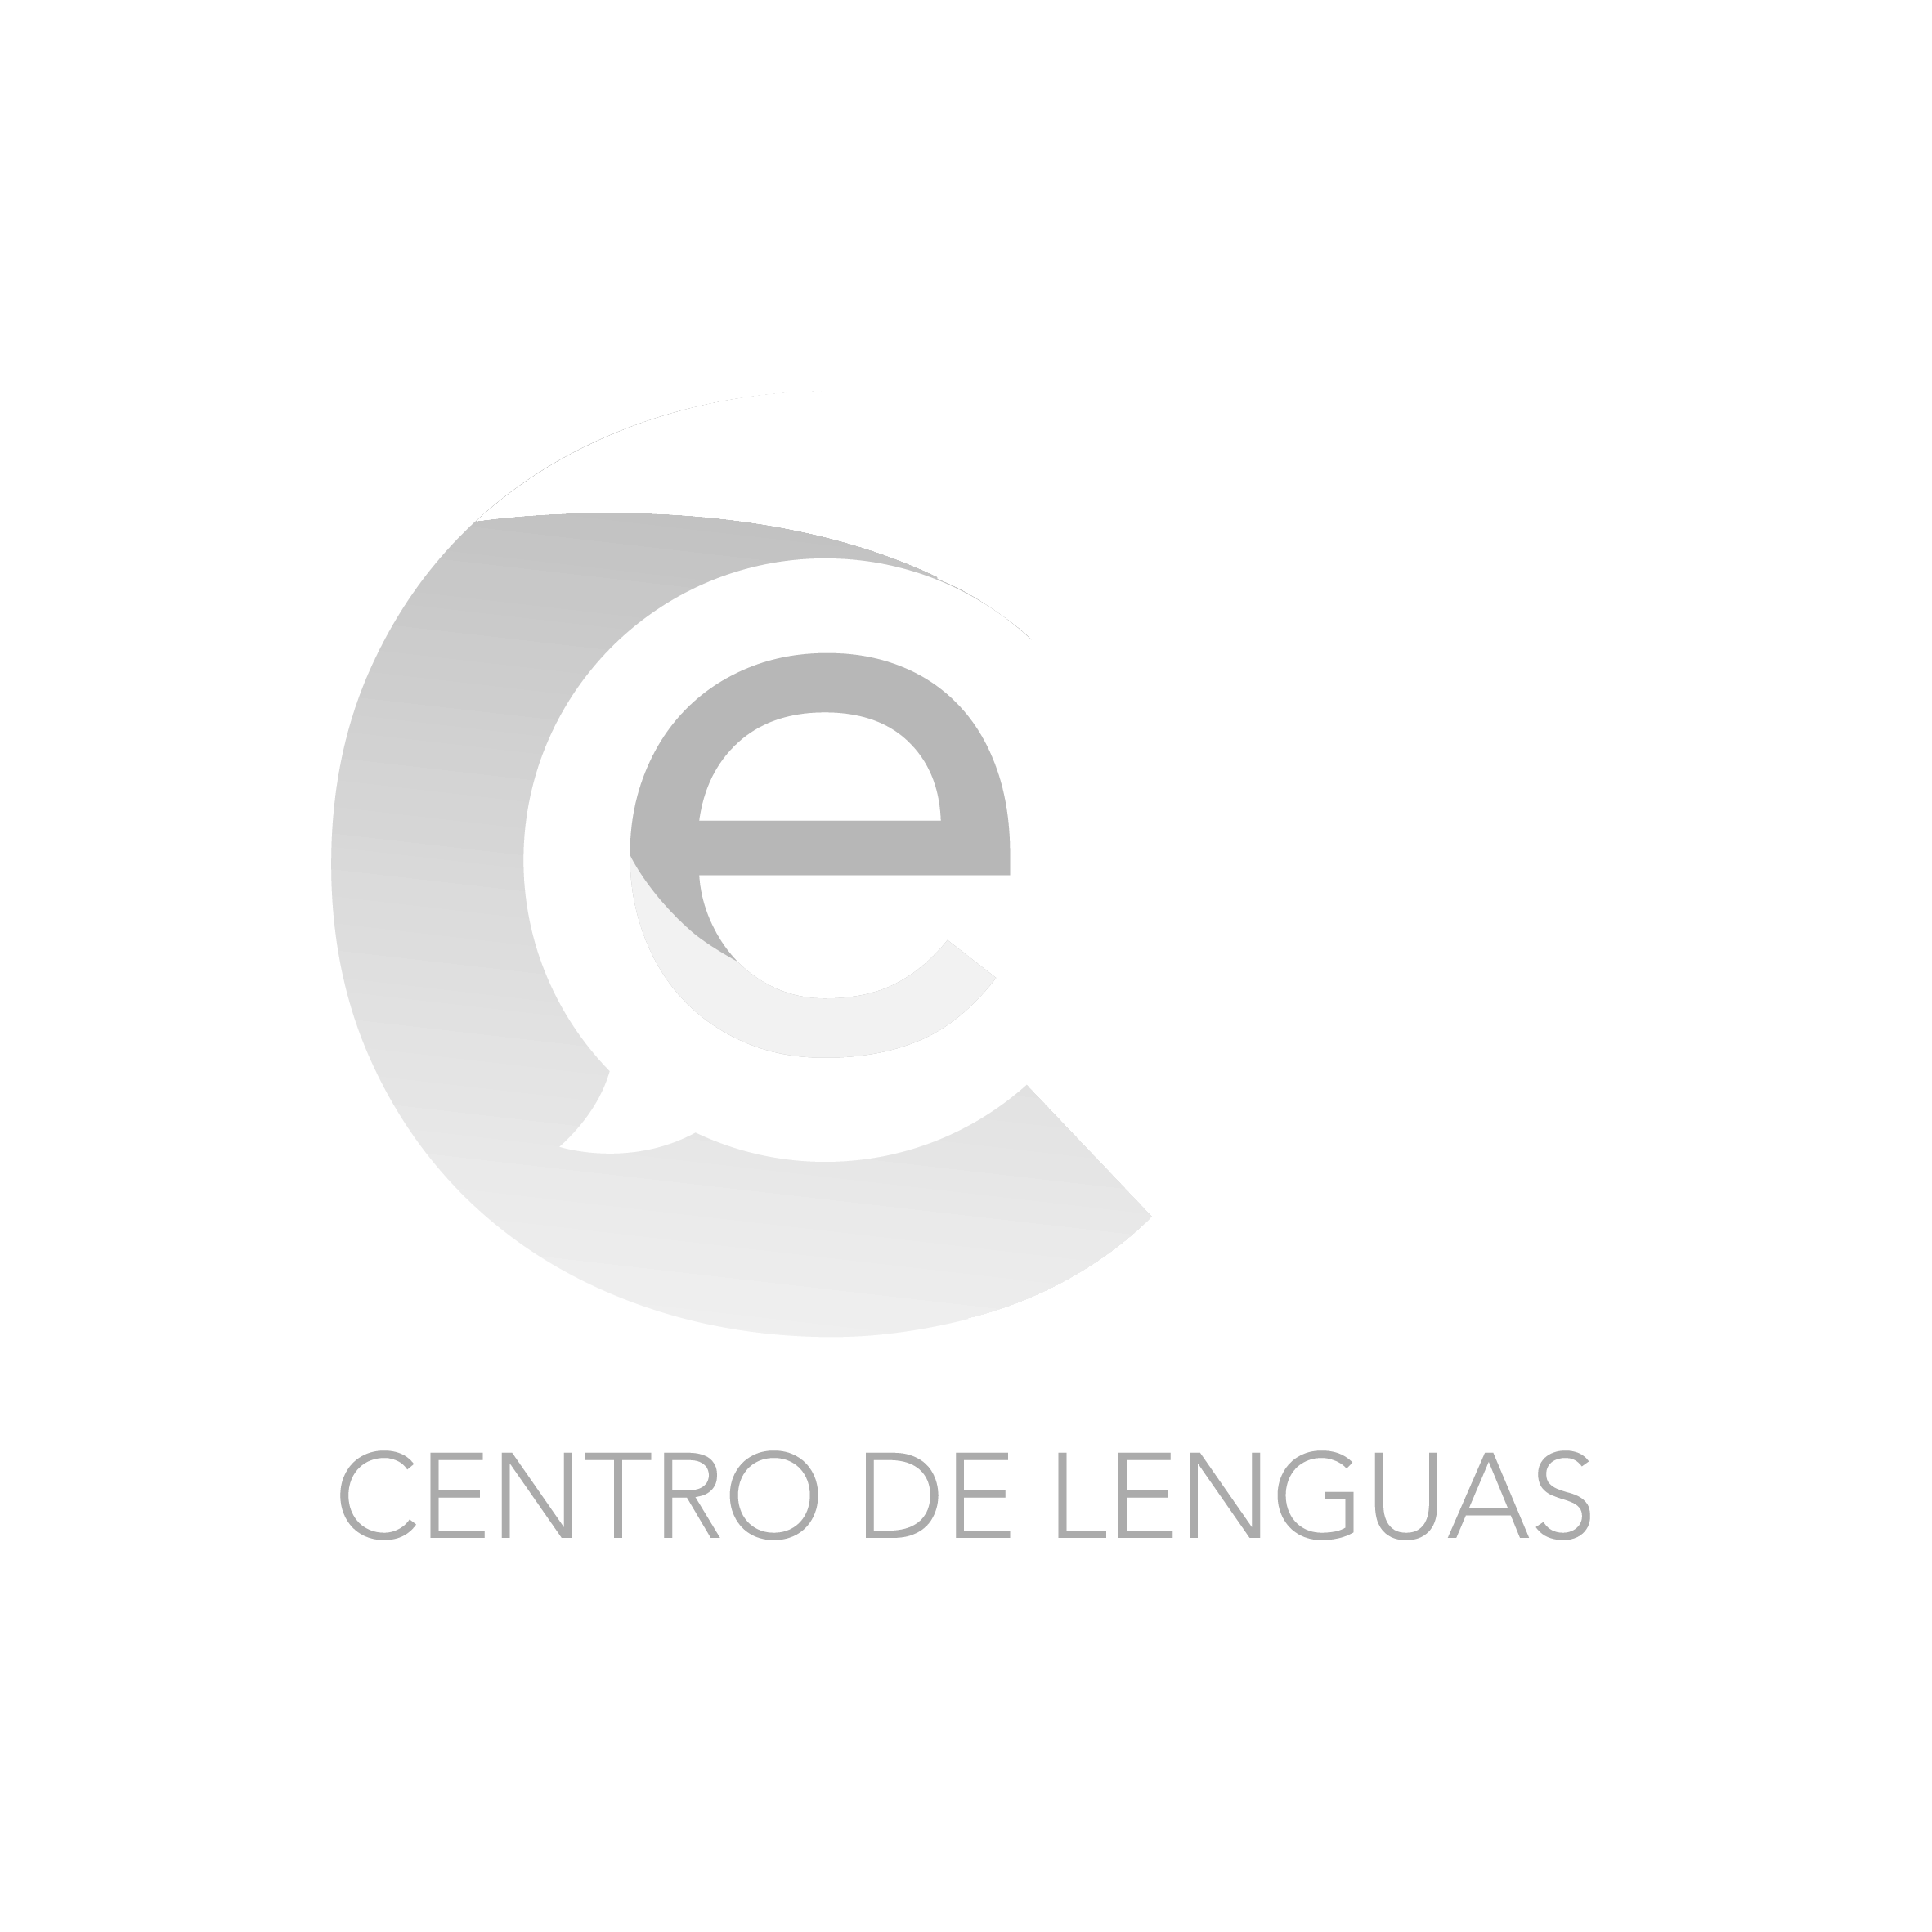 CeL logo